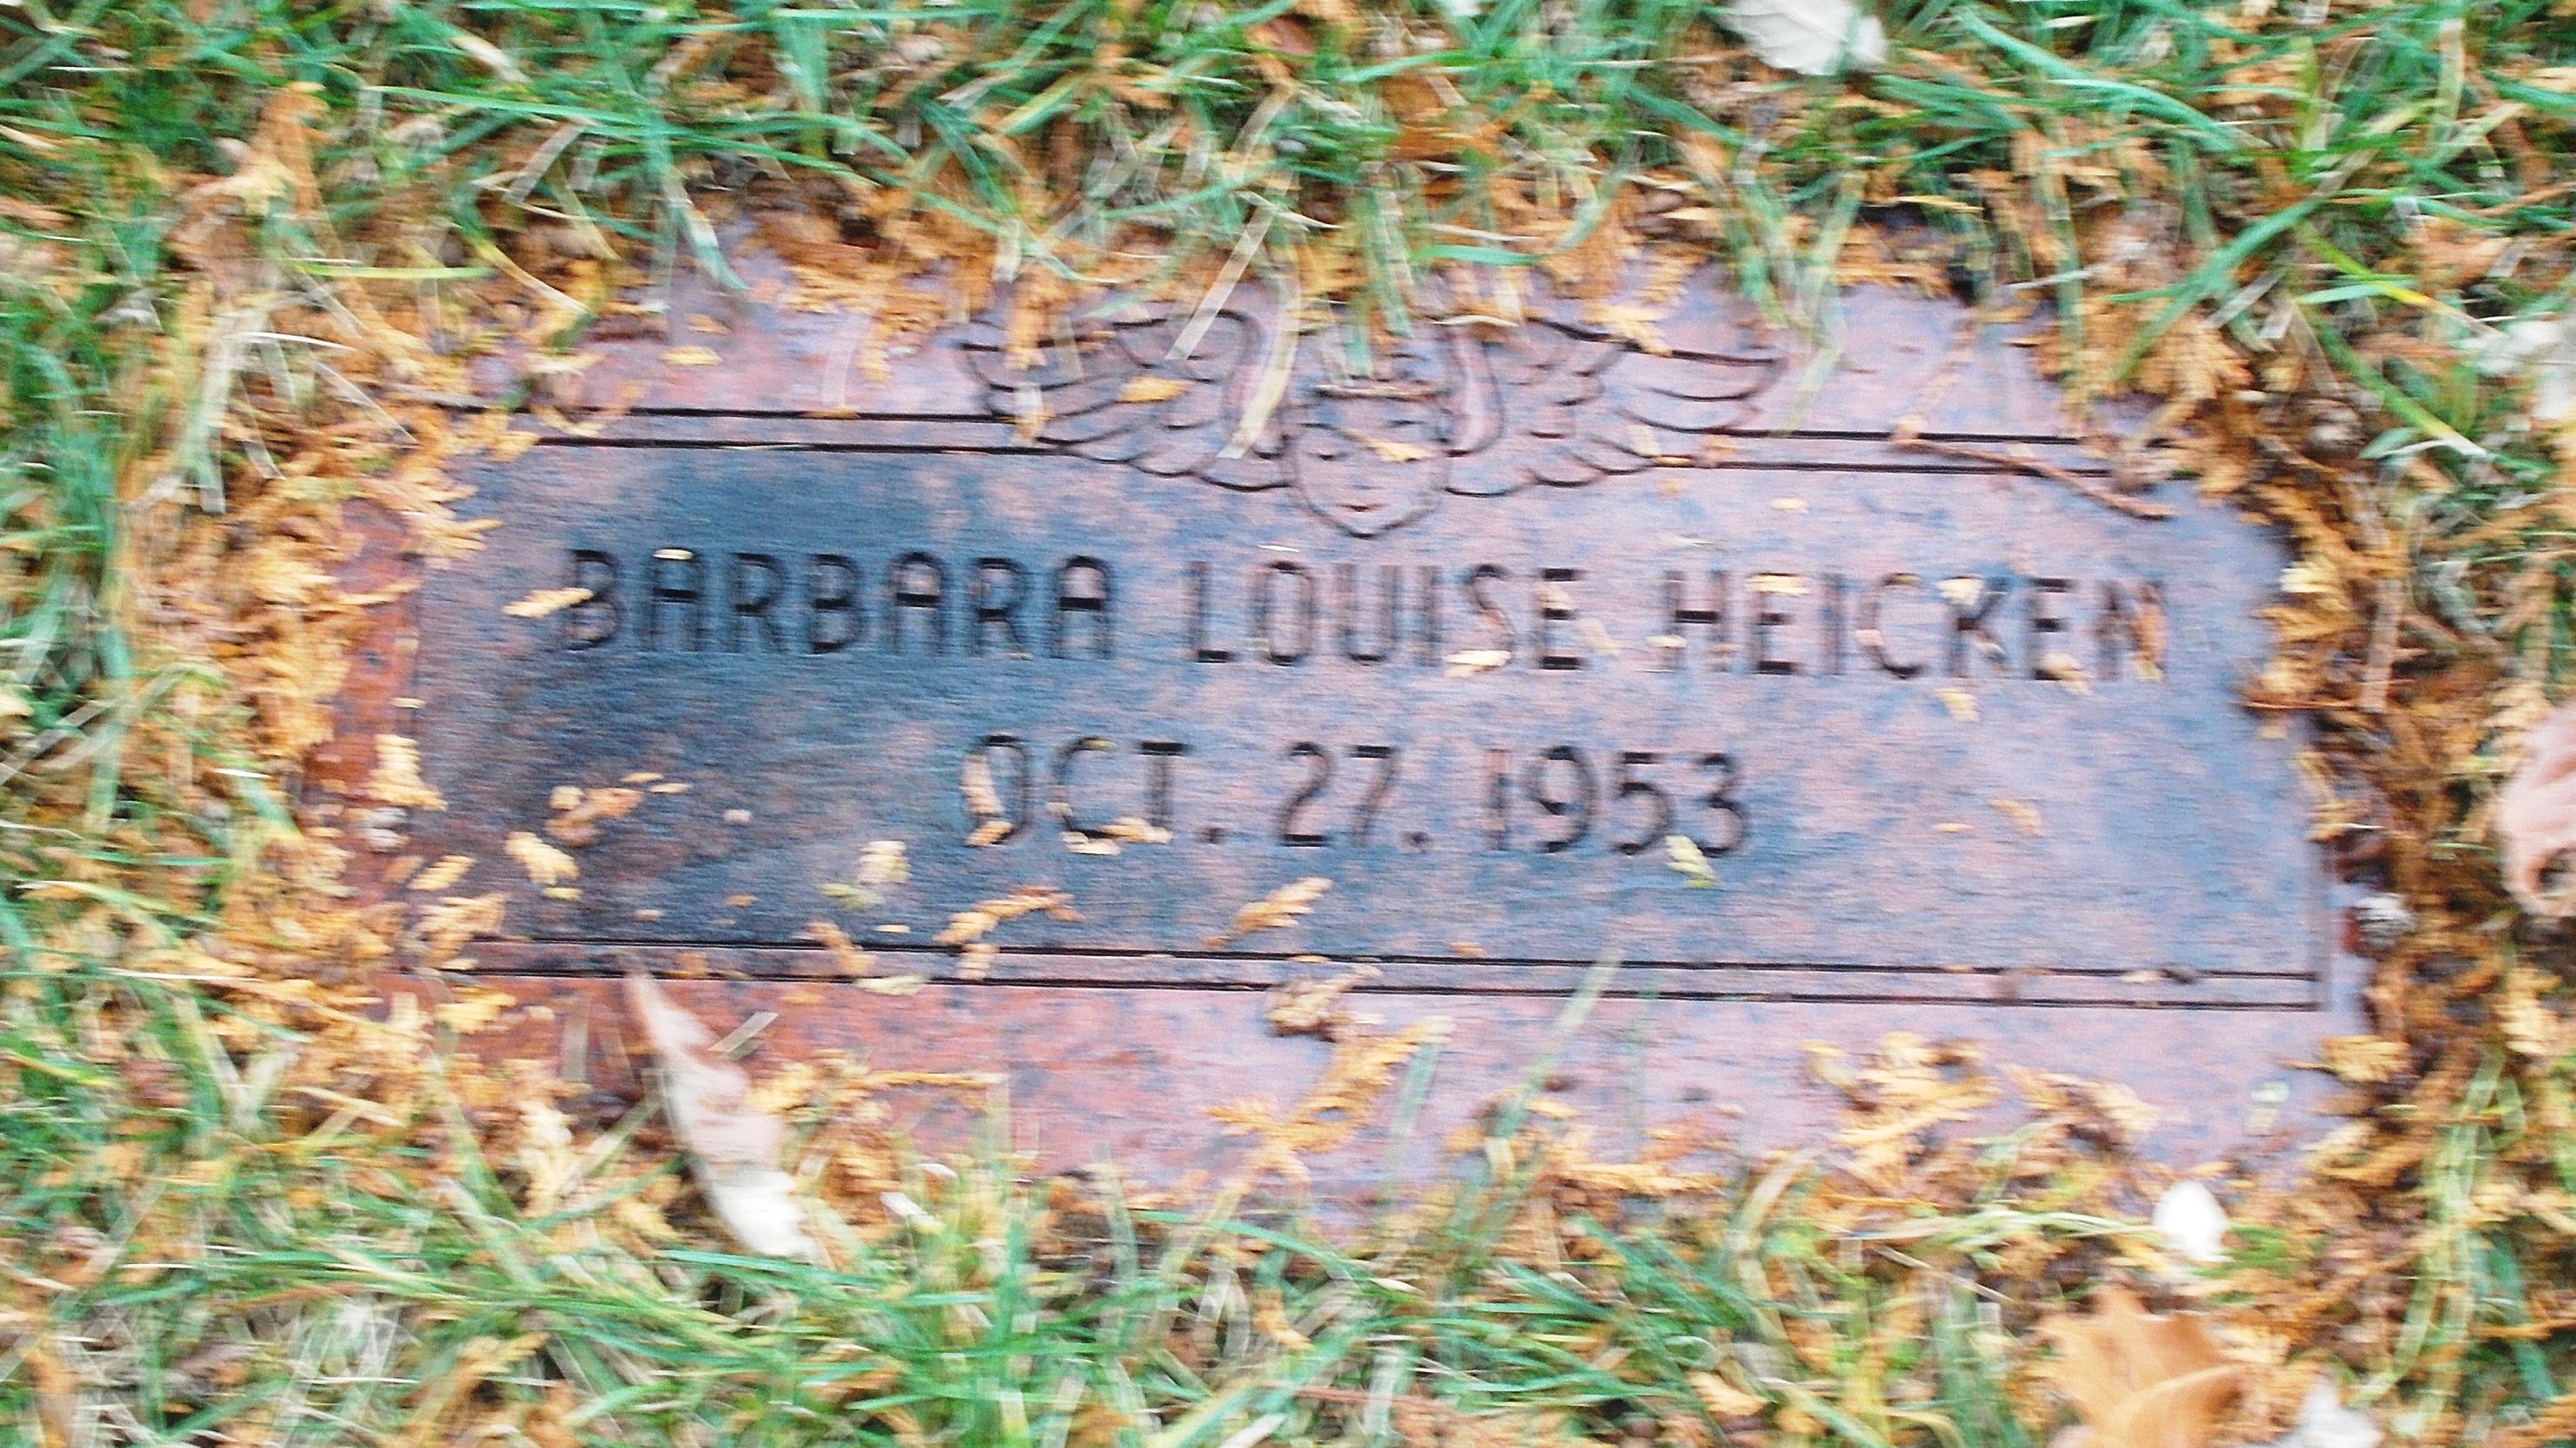 Barbara Louise Heicken